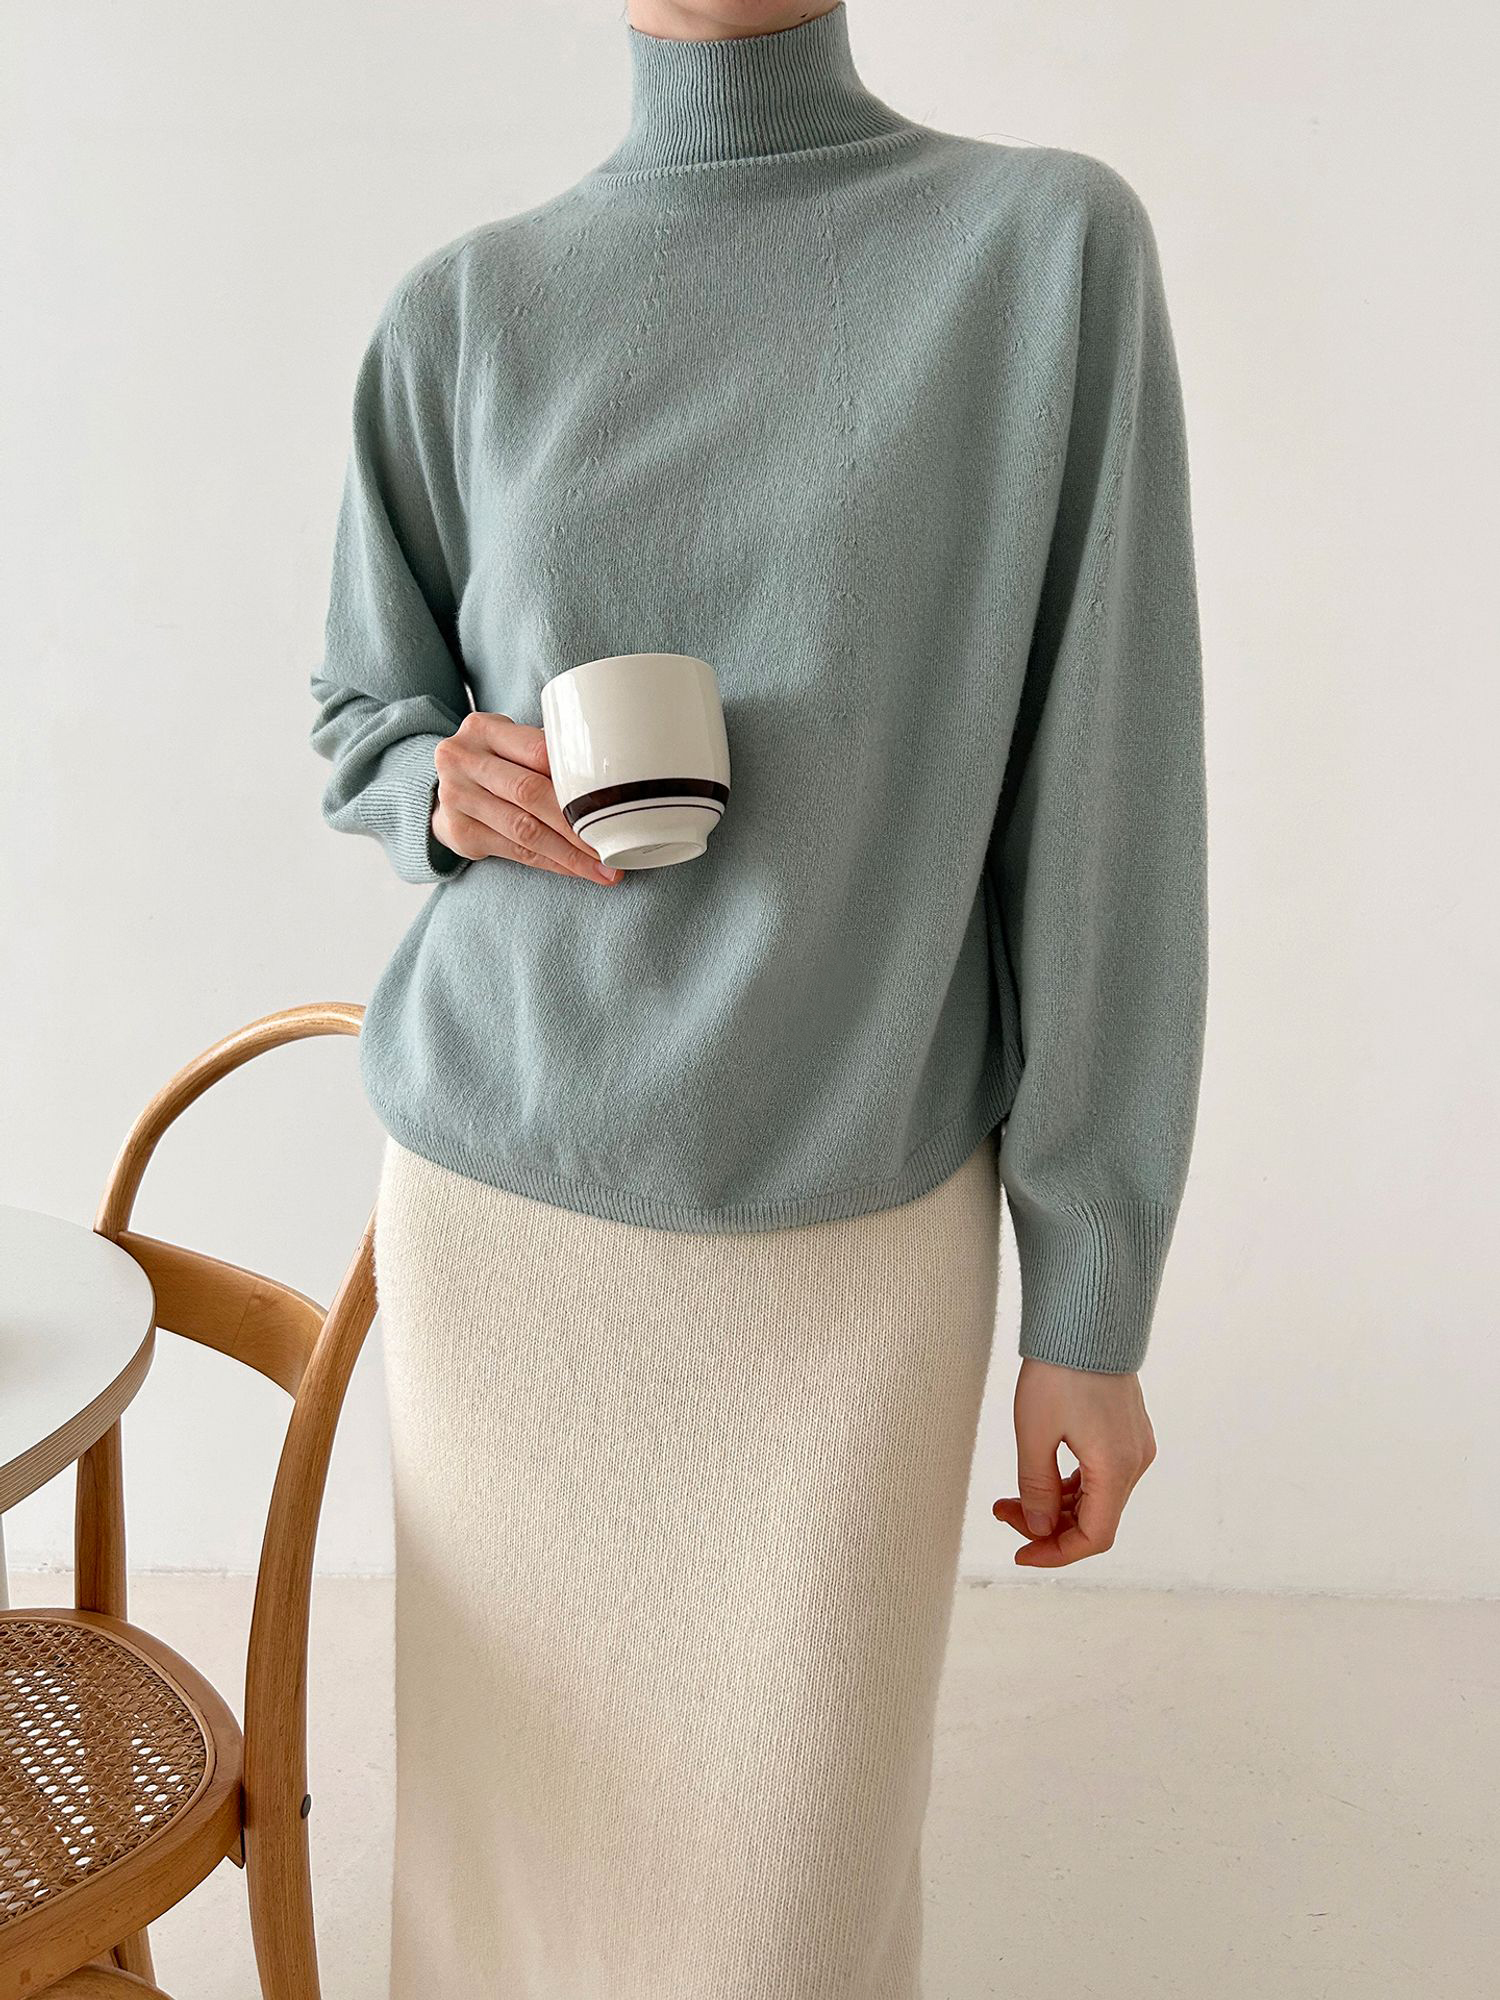 Whole Garment Wool Roro Half Neck Long Sleeve Knit Tee